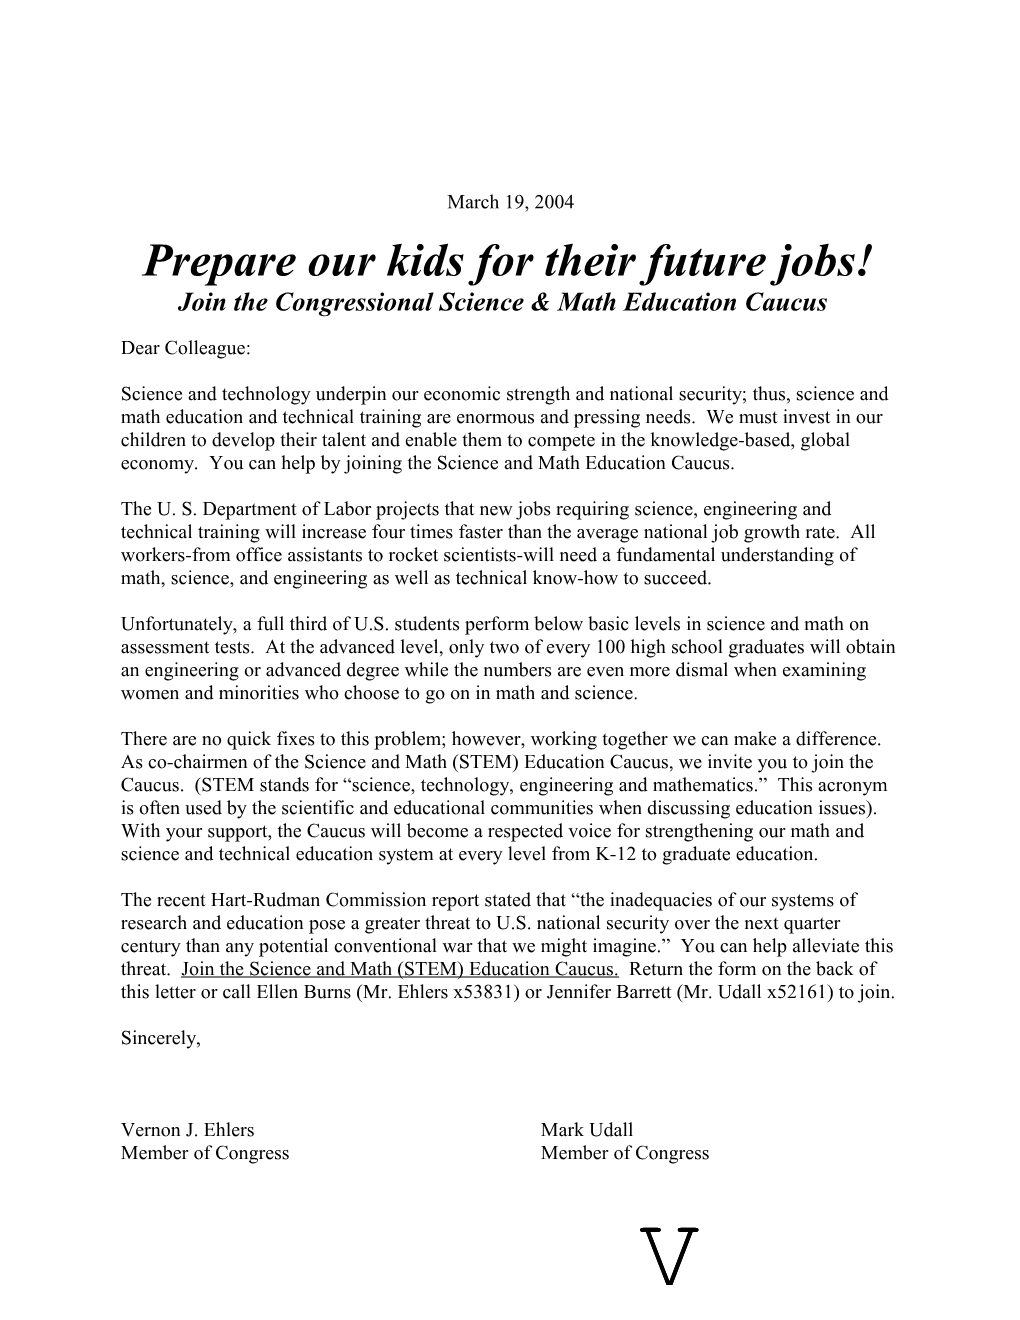 Prepare Our Kids for Their Future Jobs!